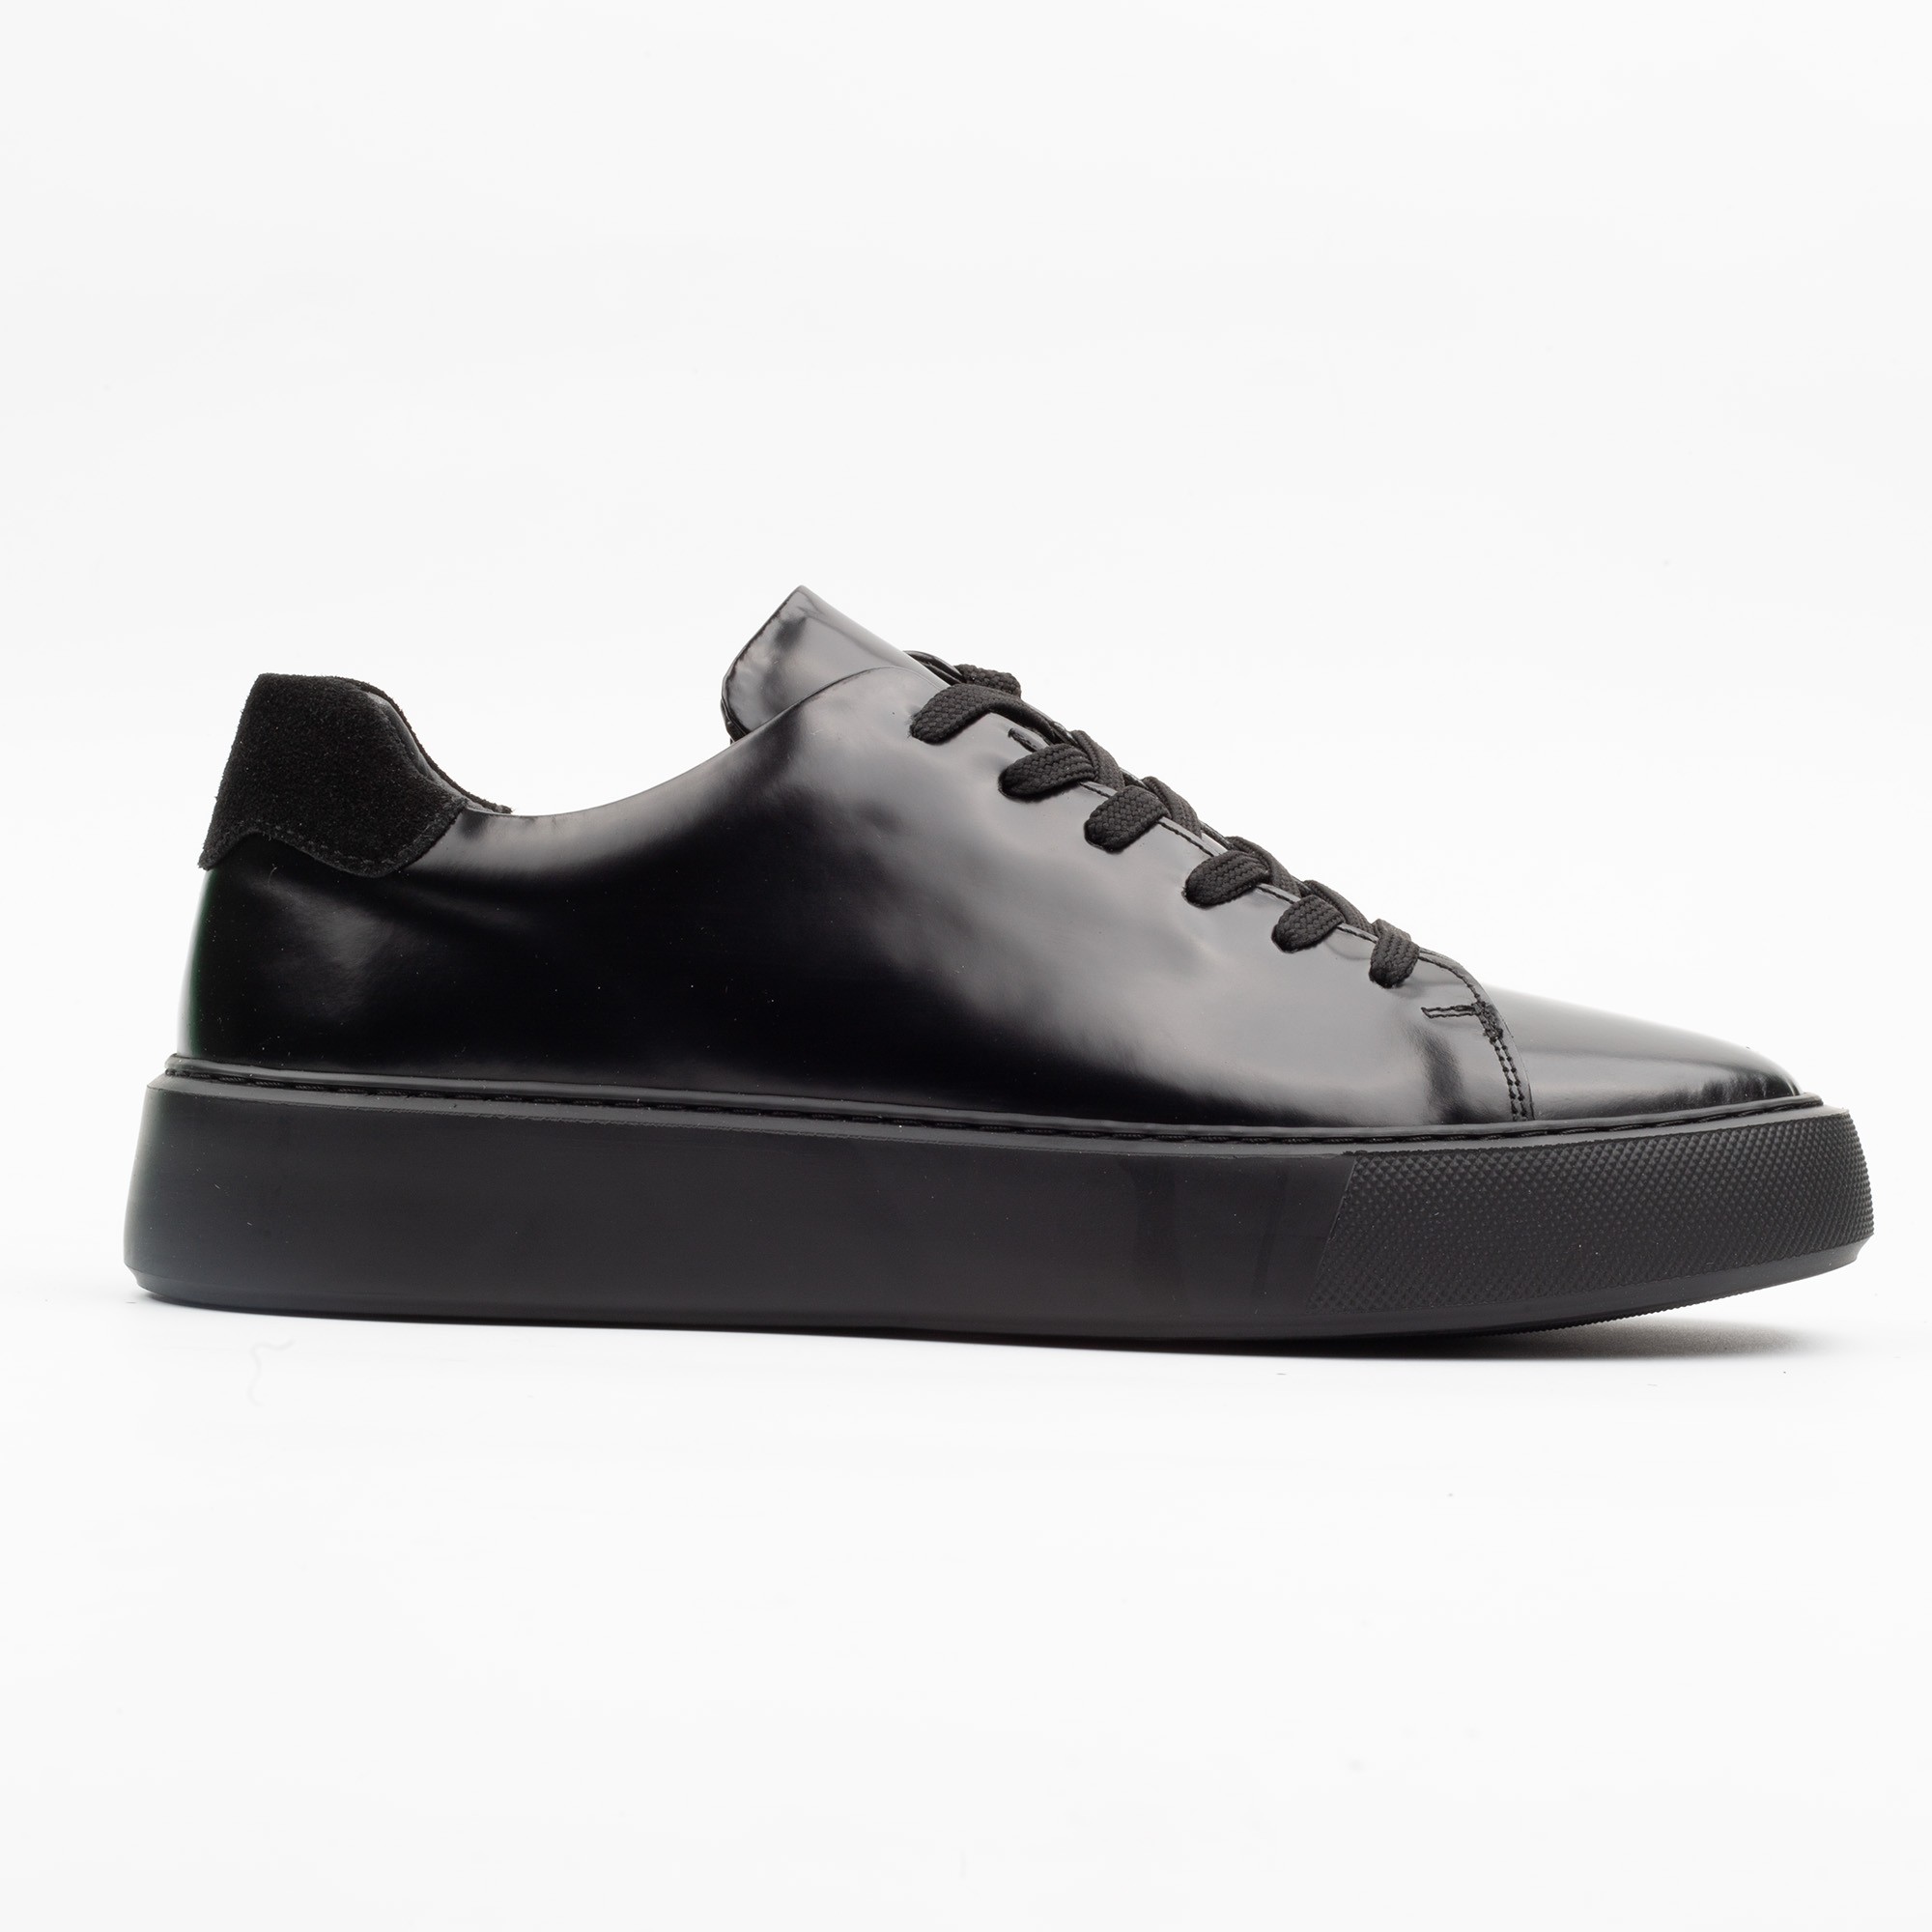 Calvano one tone black shiny leather casual men shoes